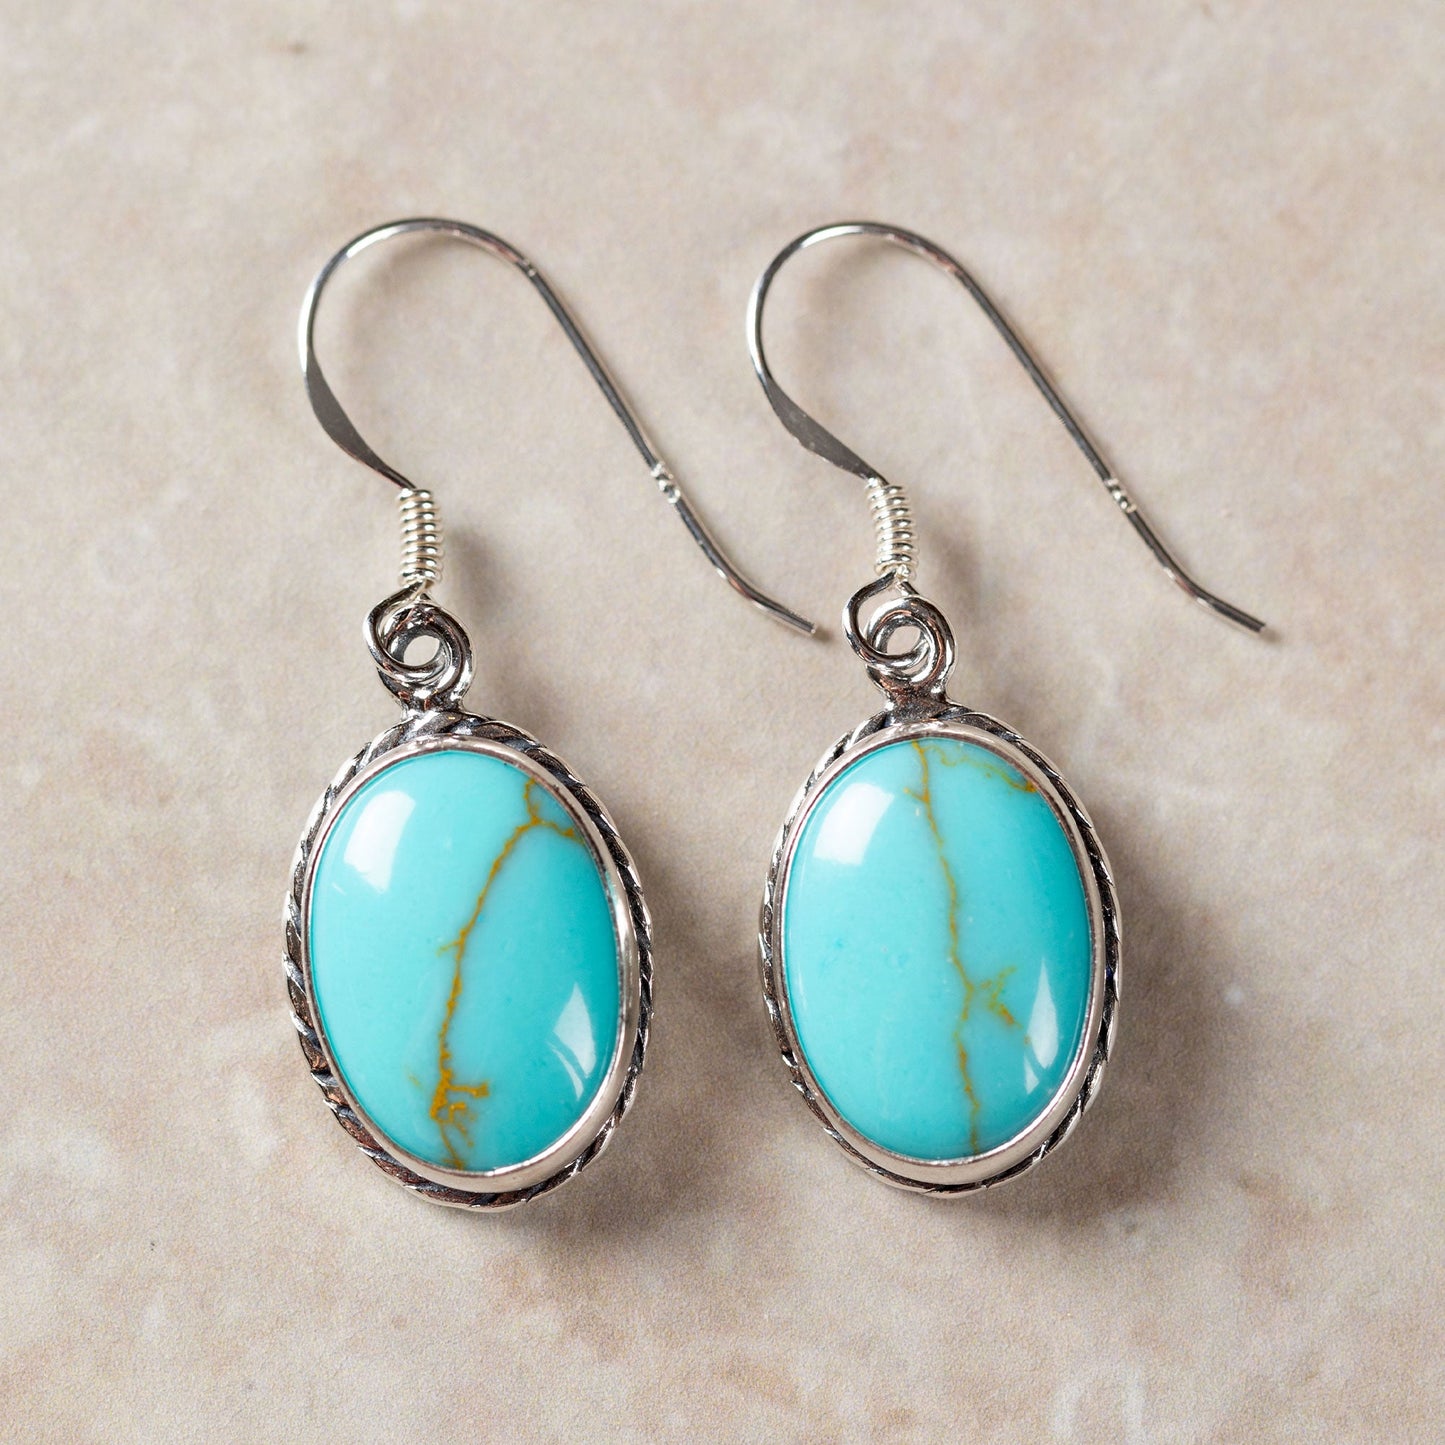 Woven Sterling & Turquoise Earrings